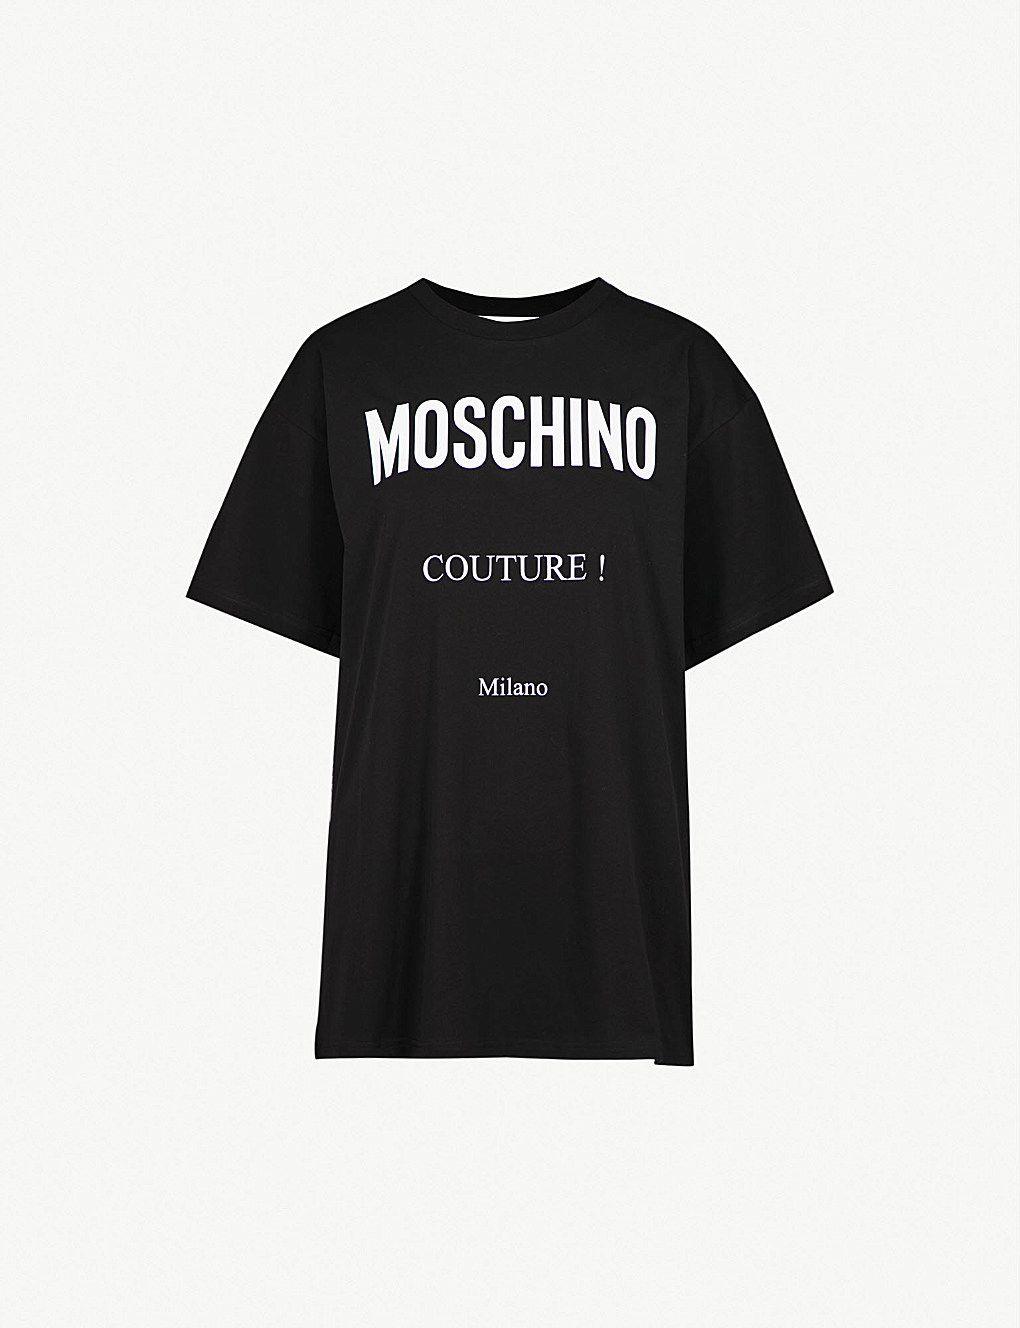 Moschino Couture Logo - MOSCHINO - Couture-print cotton-jersey T-shirt | Selfridges.com